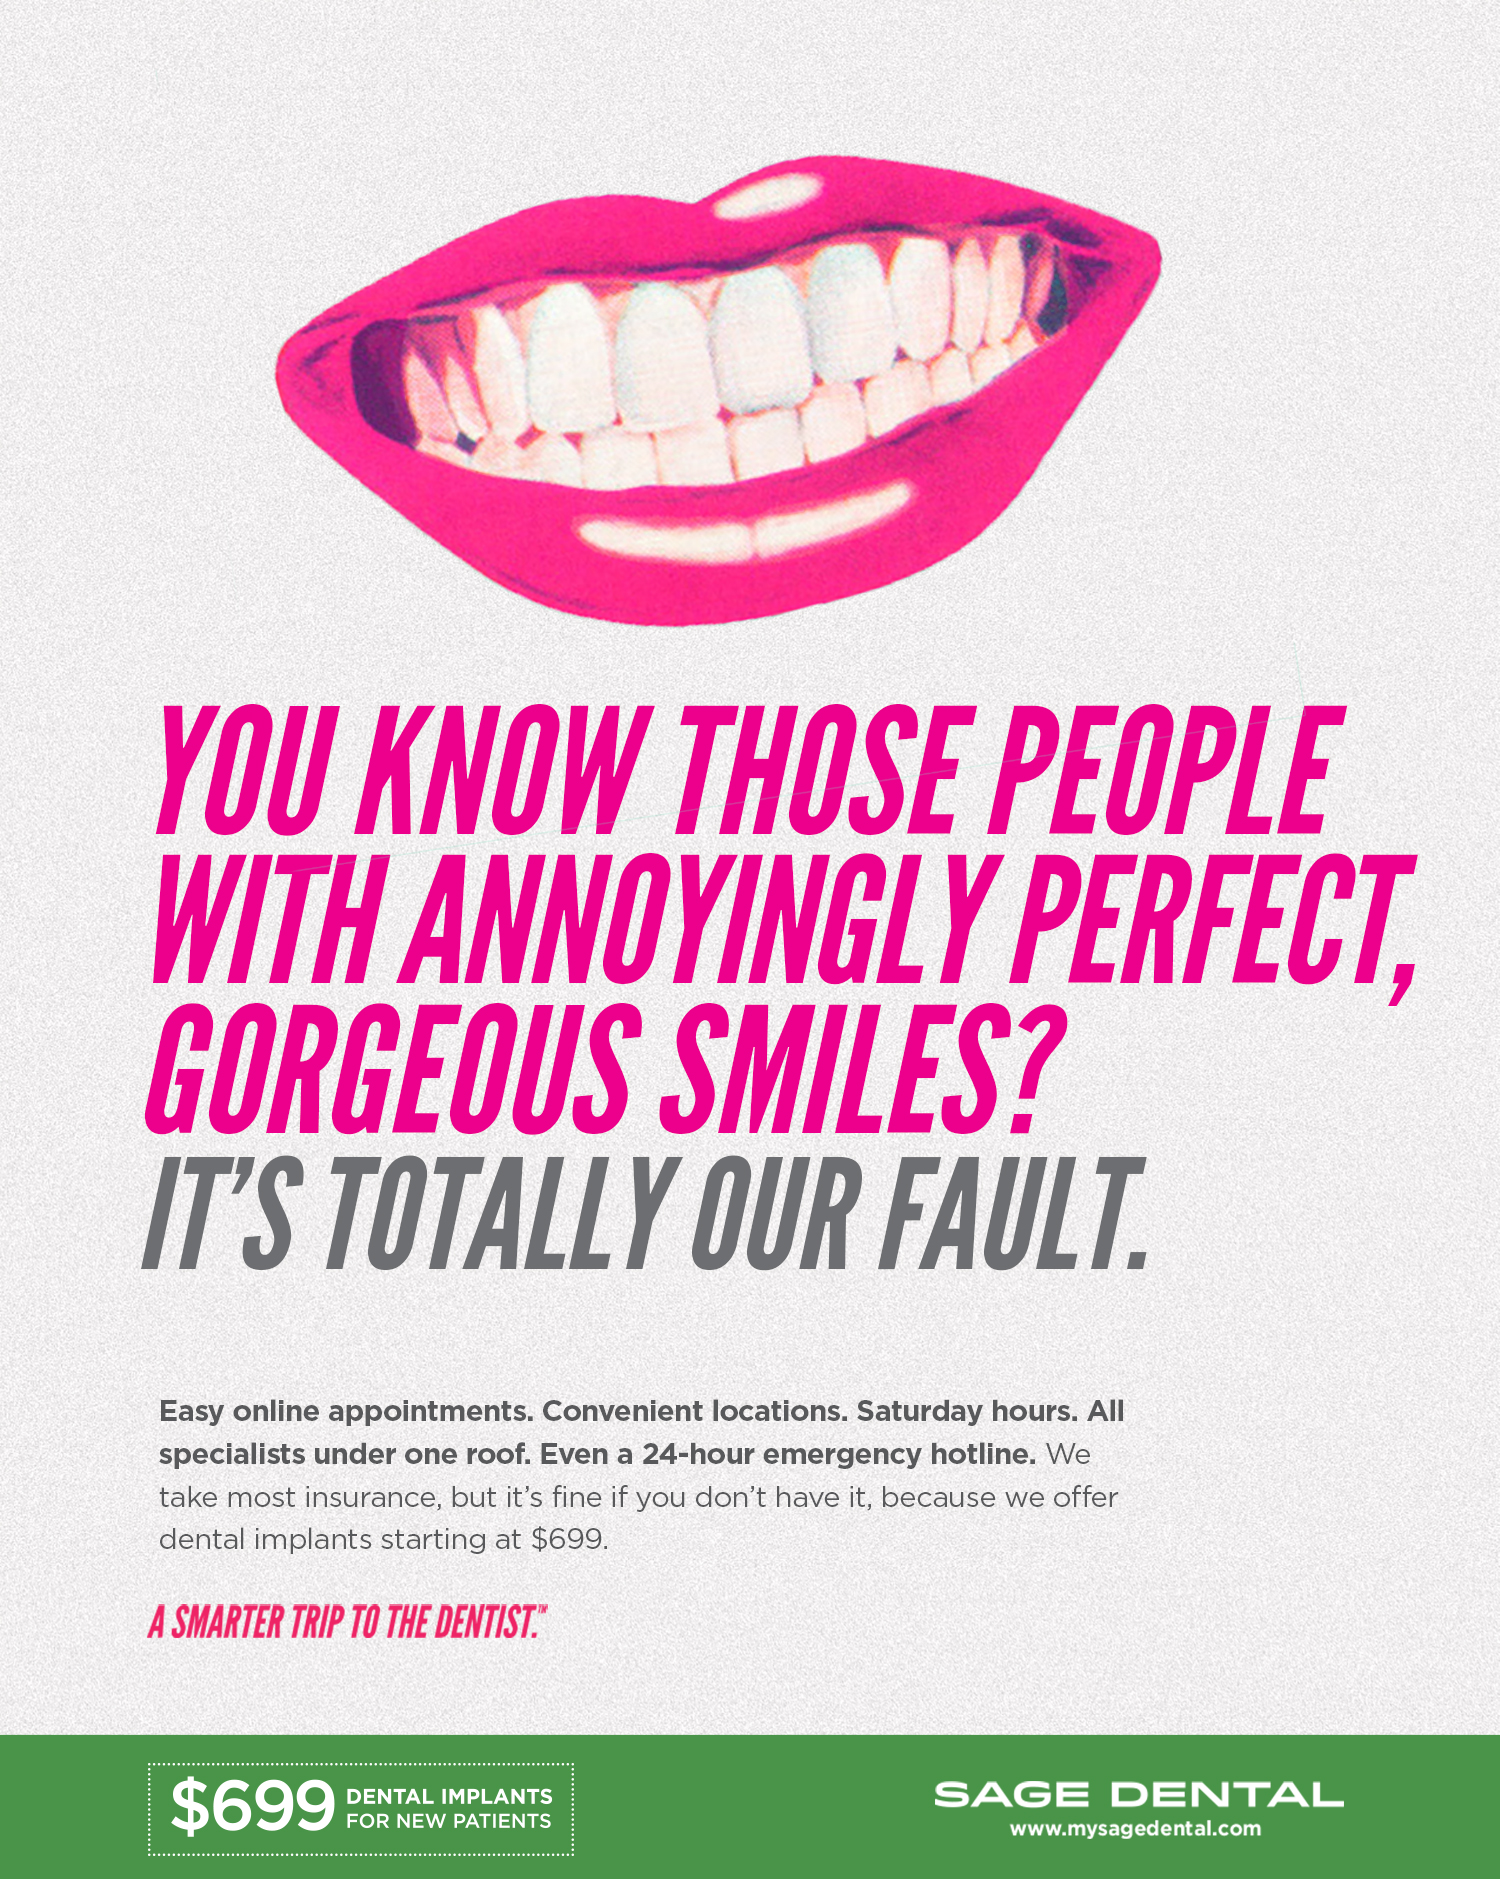 Sage Dental Marketing Campaign